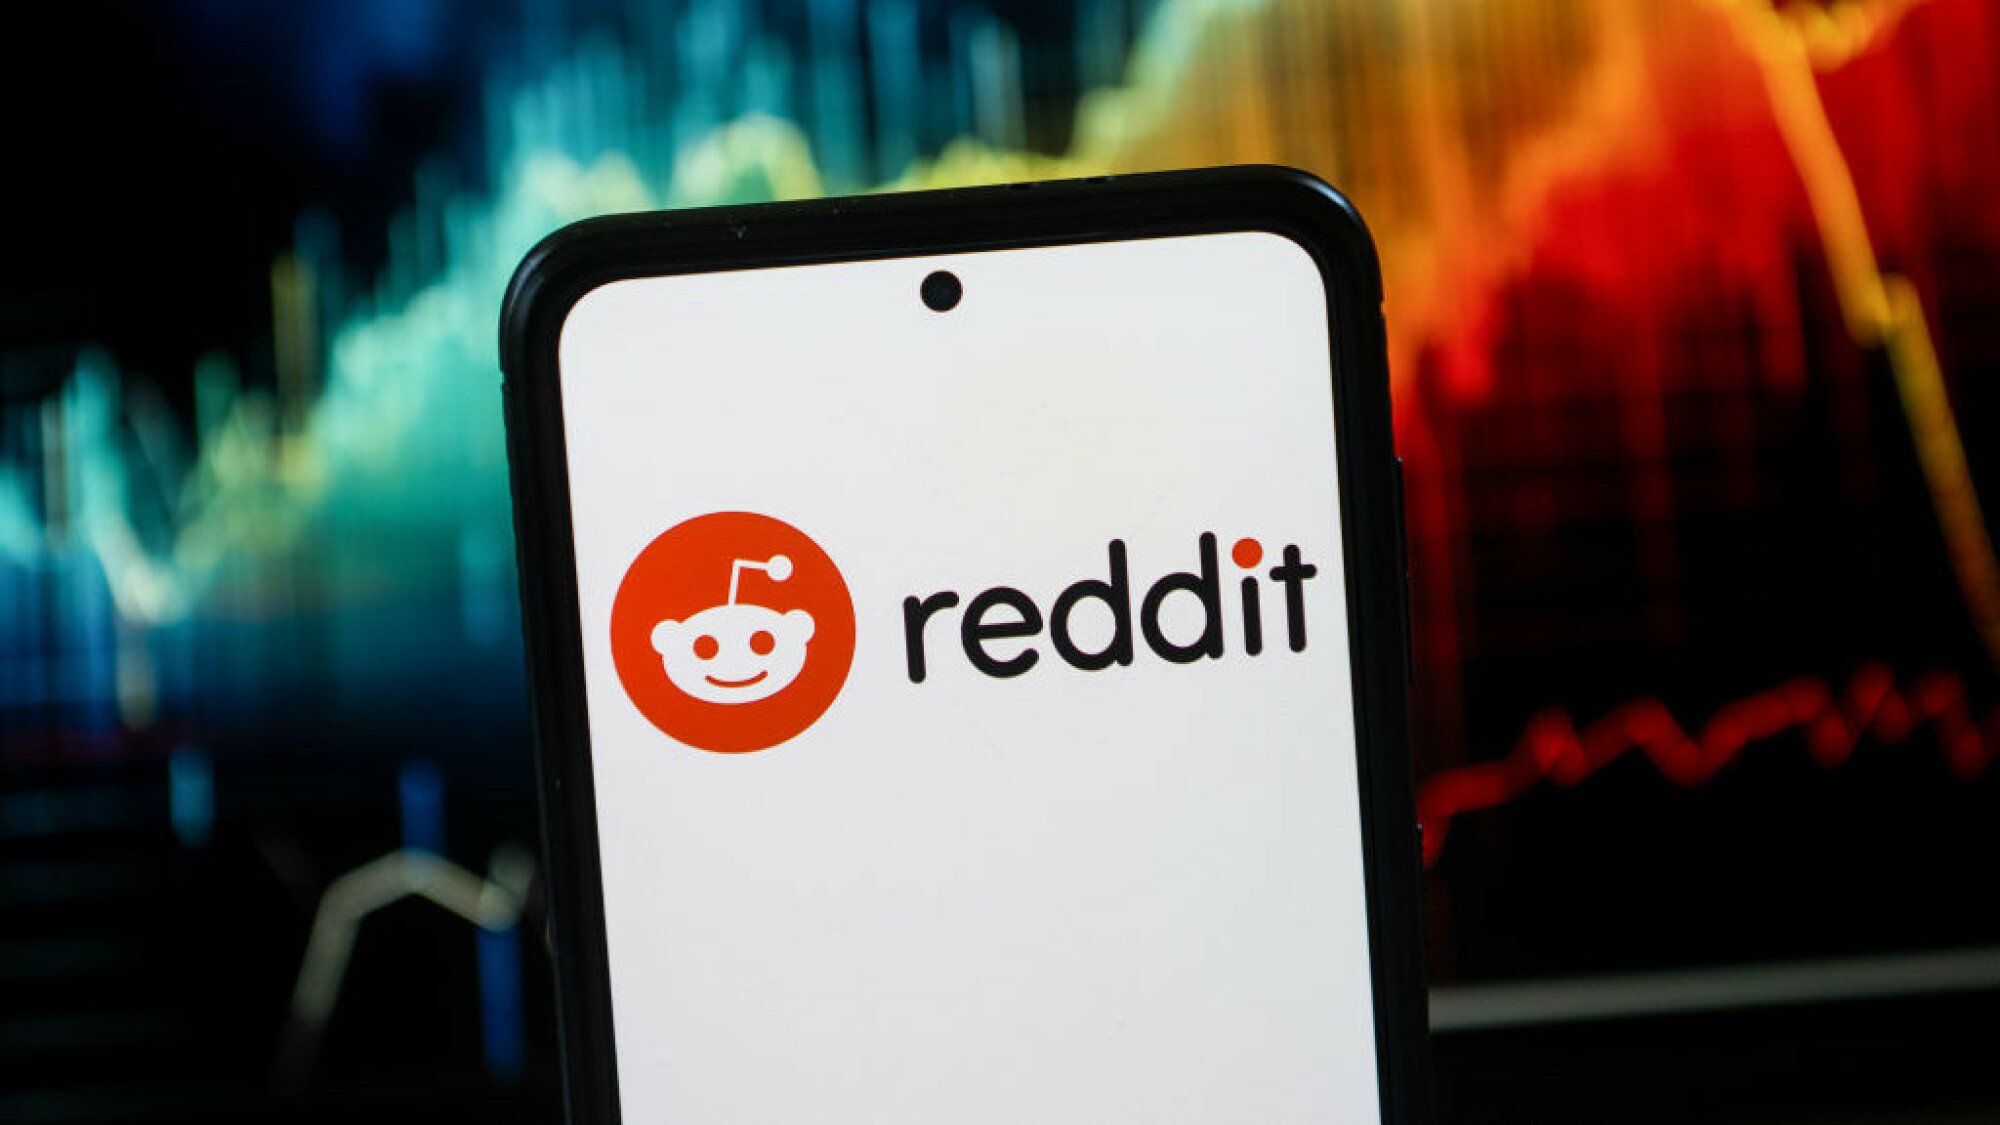 A Reddit logo seen displayed on a smartphone.